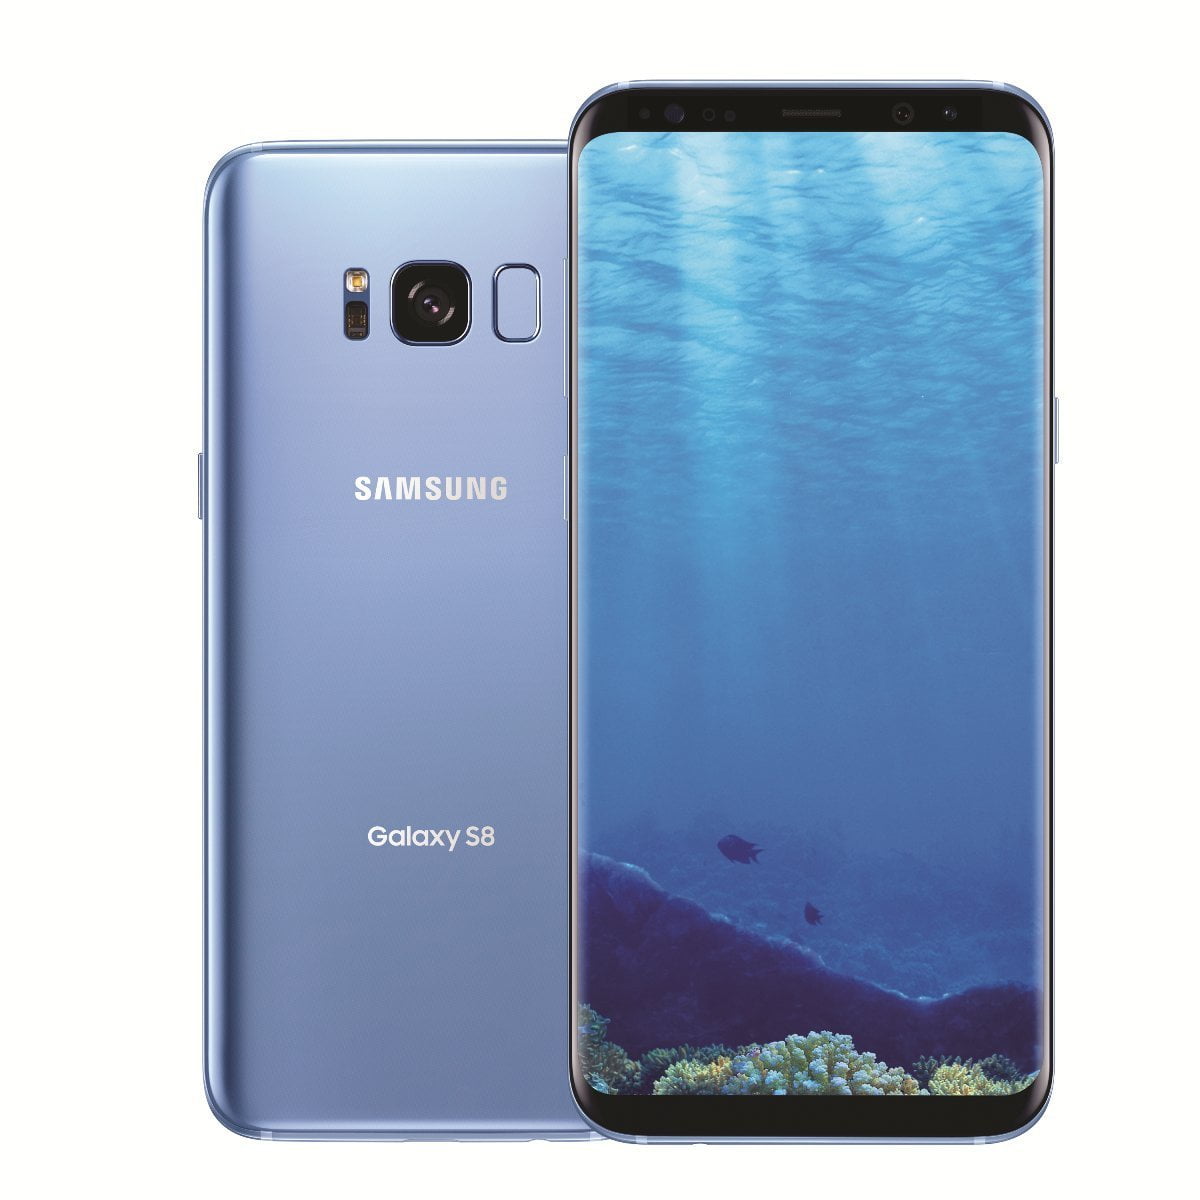 Refurbished Like New  Samsung Galaxy S8 SM-G950U 64GB Factory Unlocked Android Smartphone